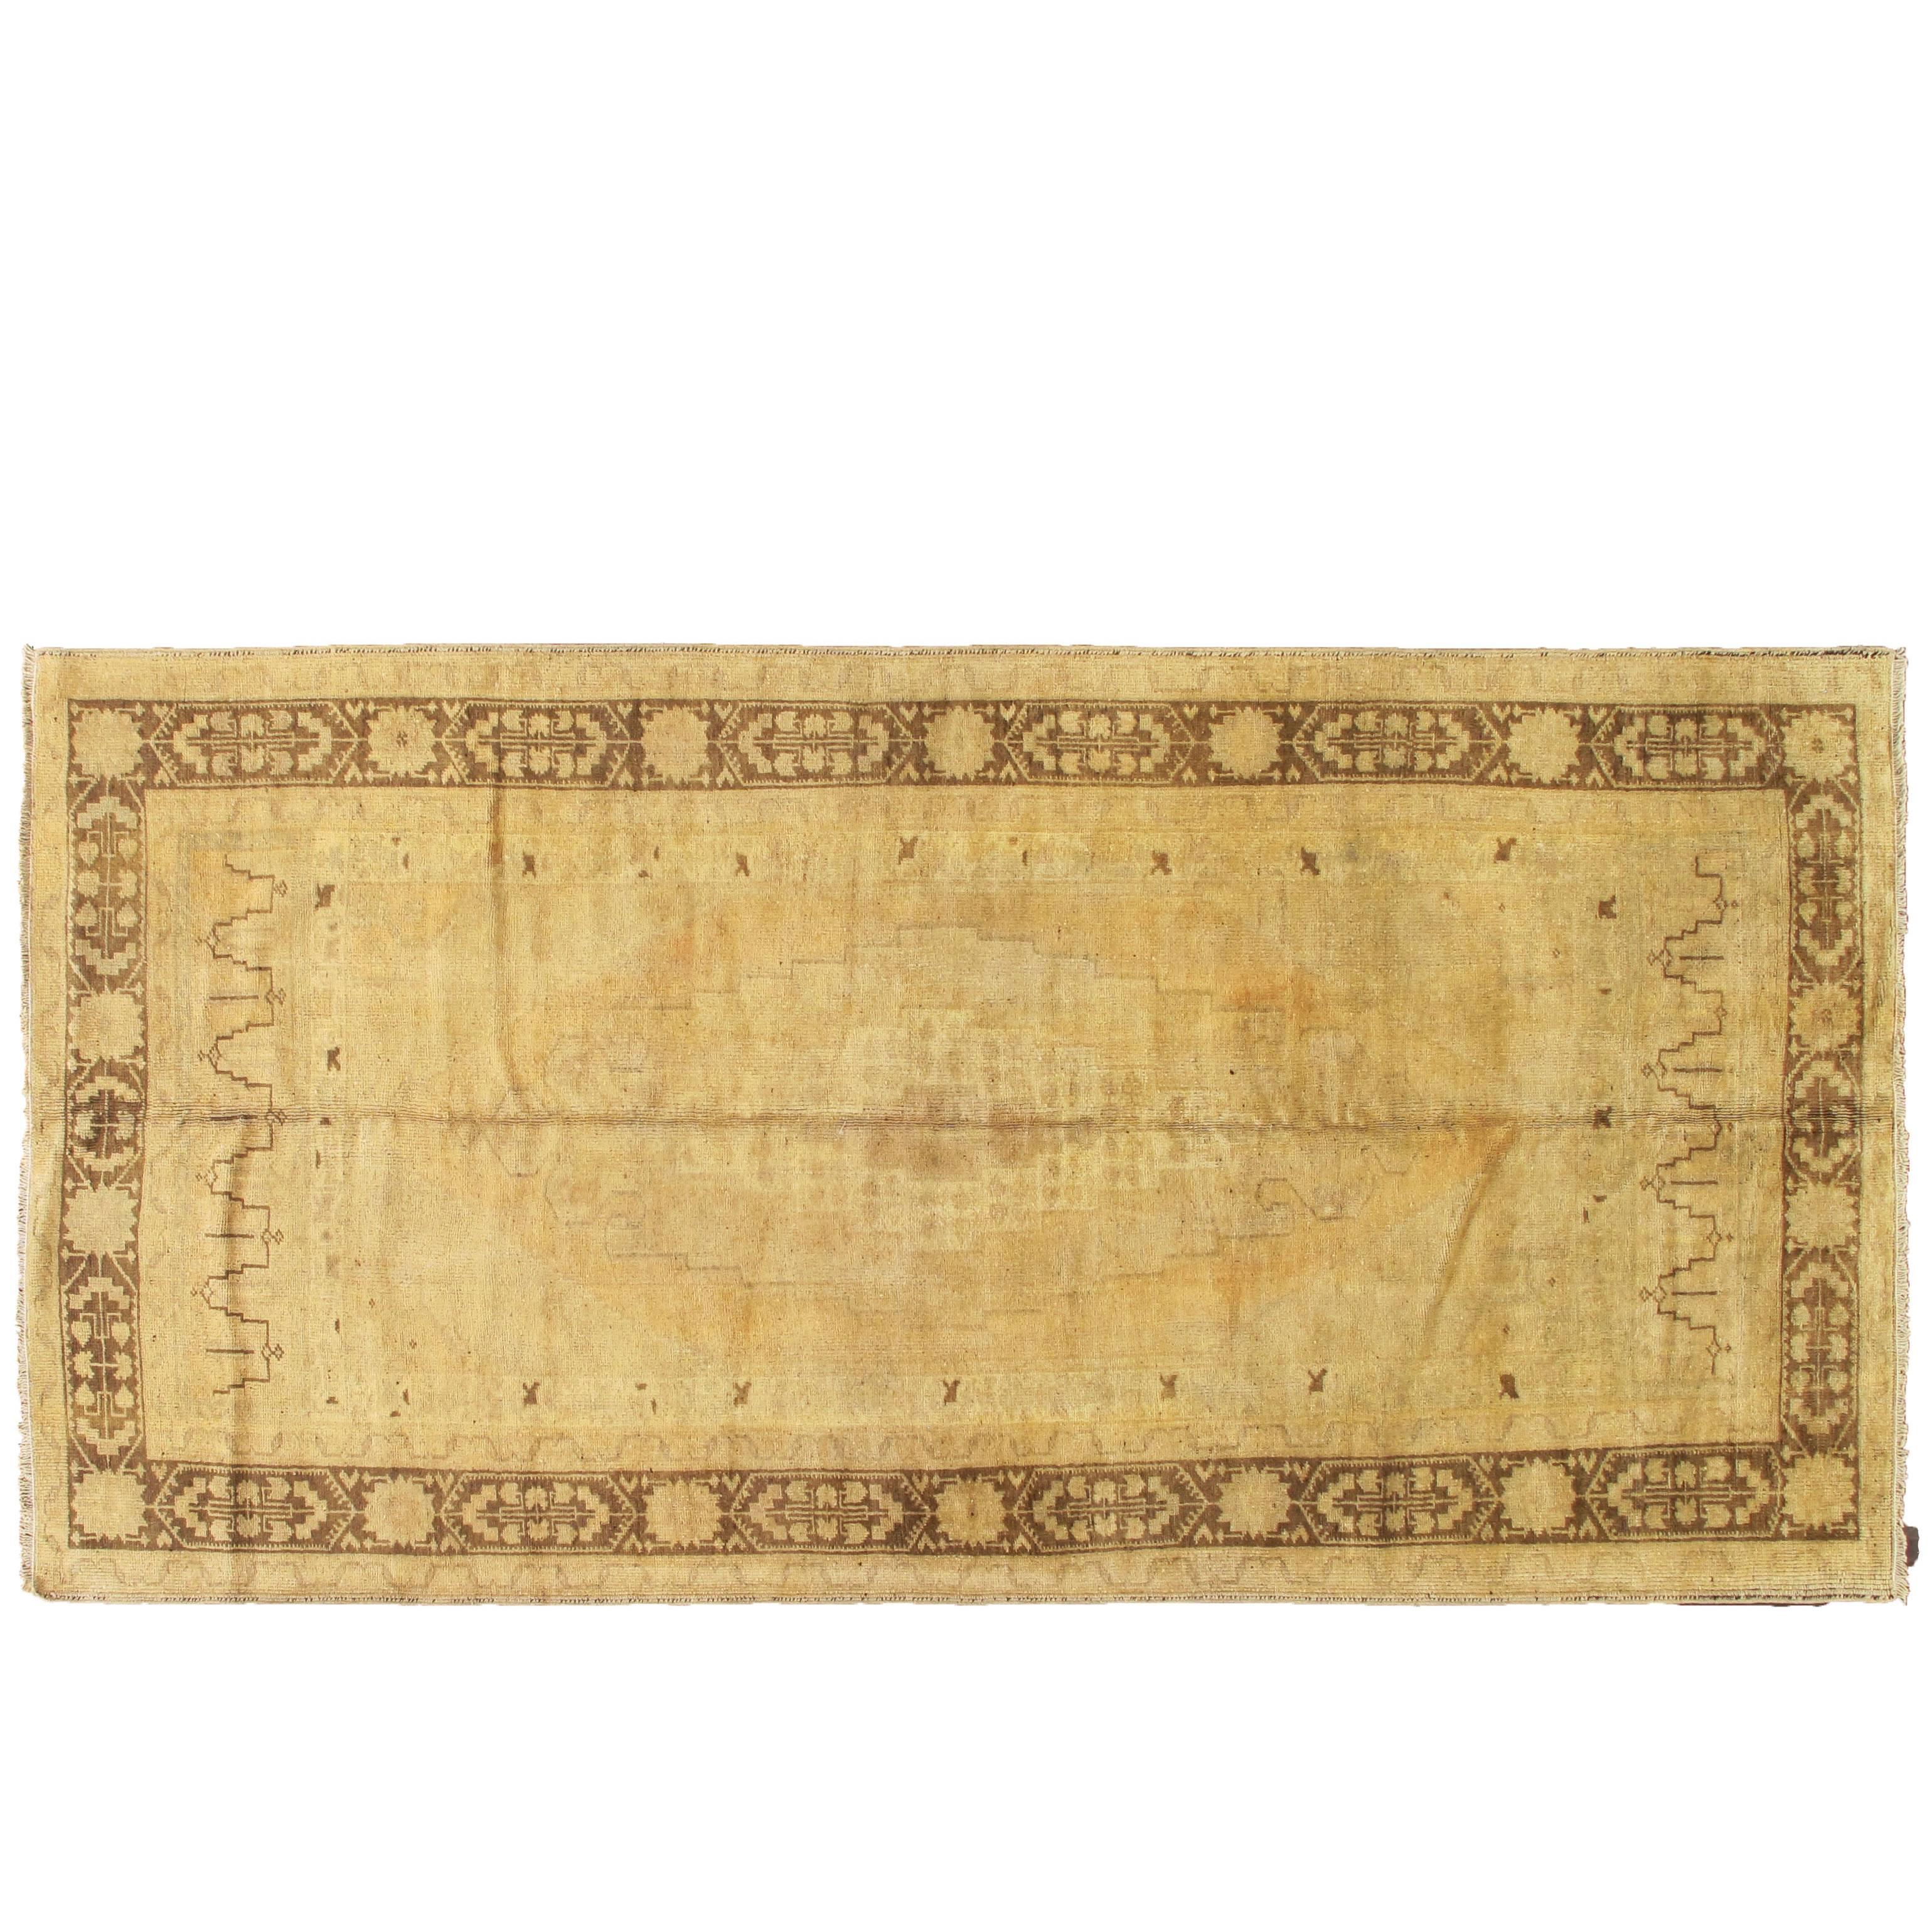 Early 20th Century Beige, Tan Turkish Khotan Carpet For Sale